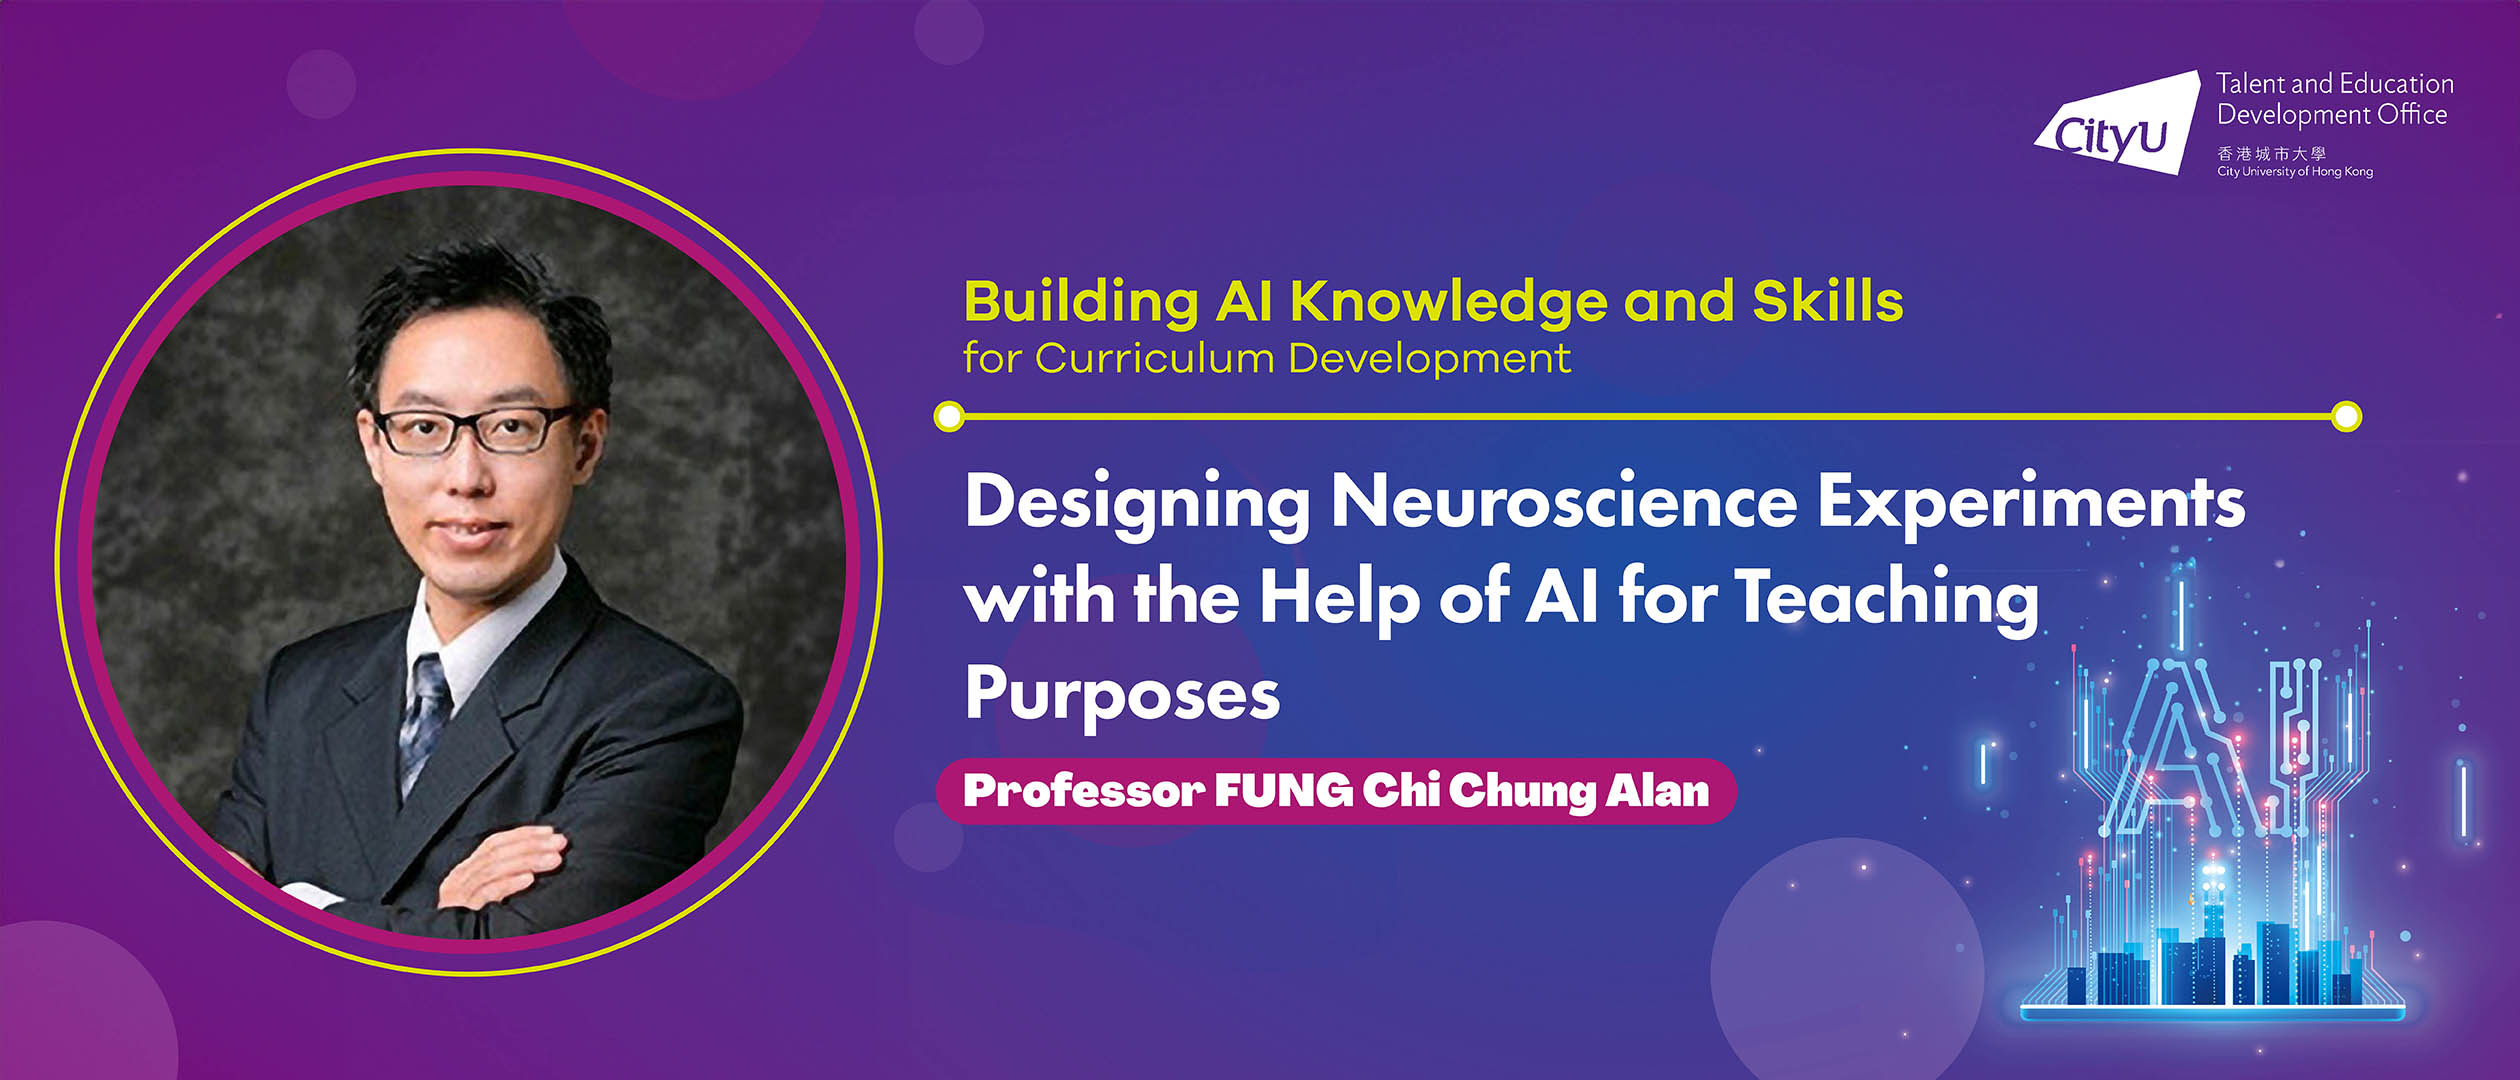 Professor FUNG Chi Chung Alan